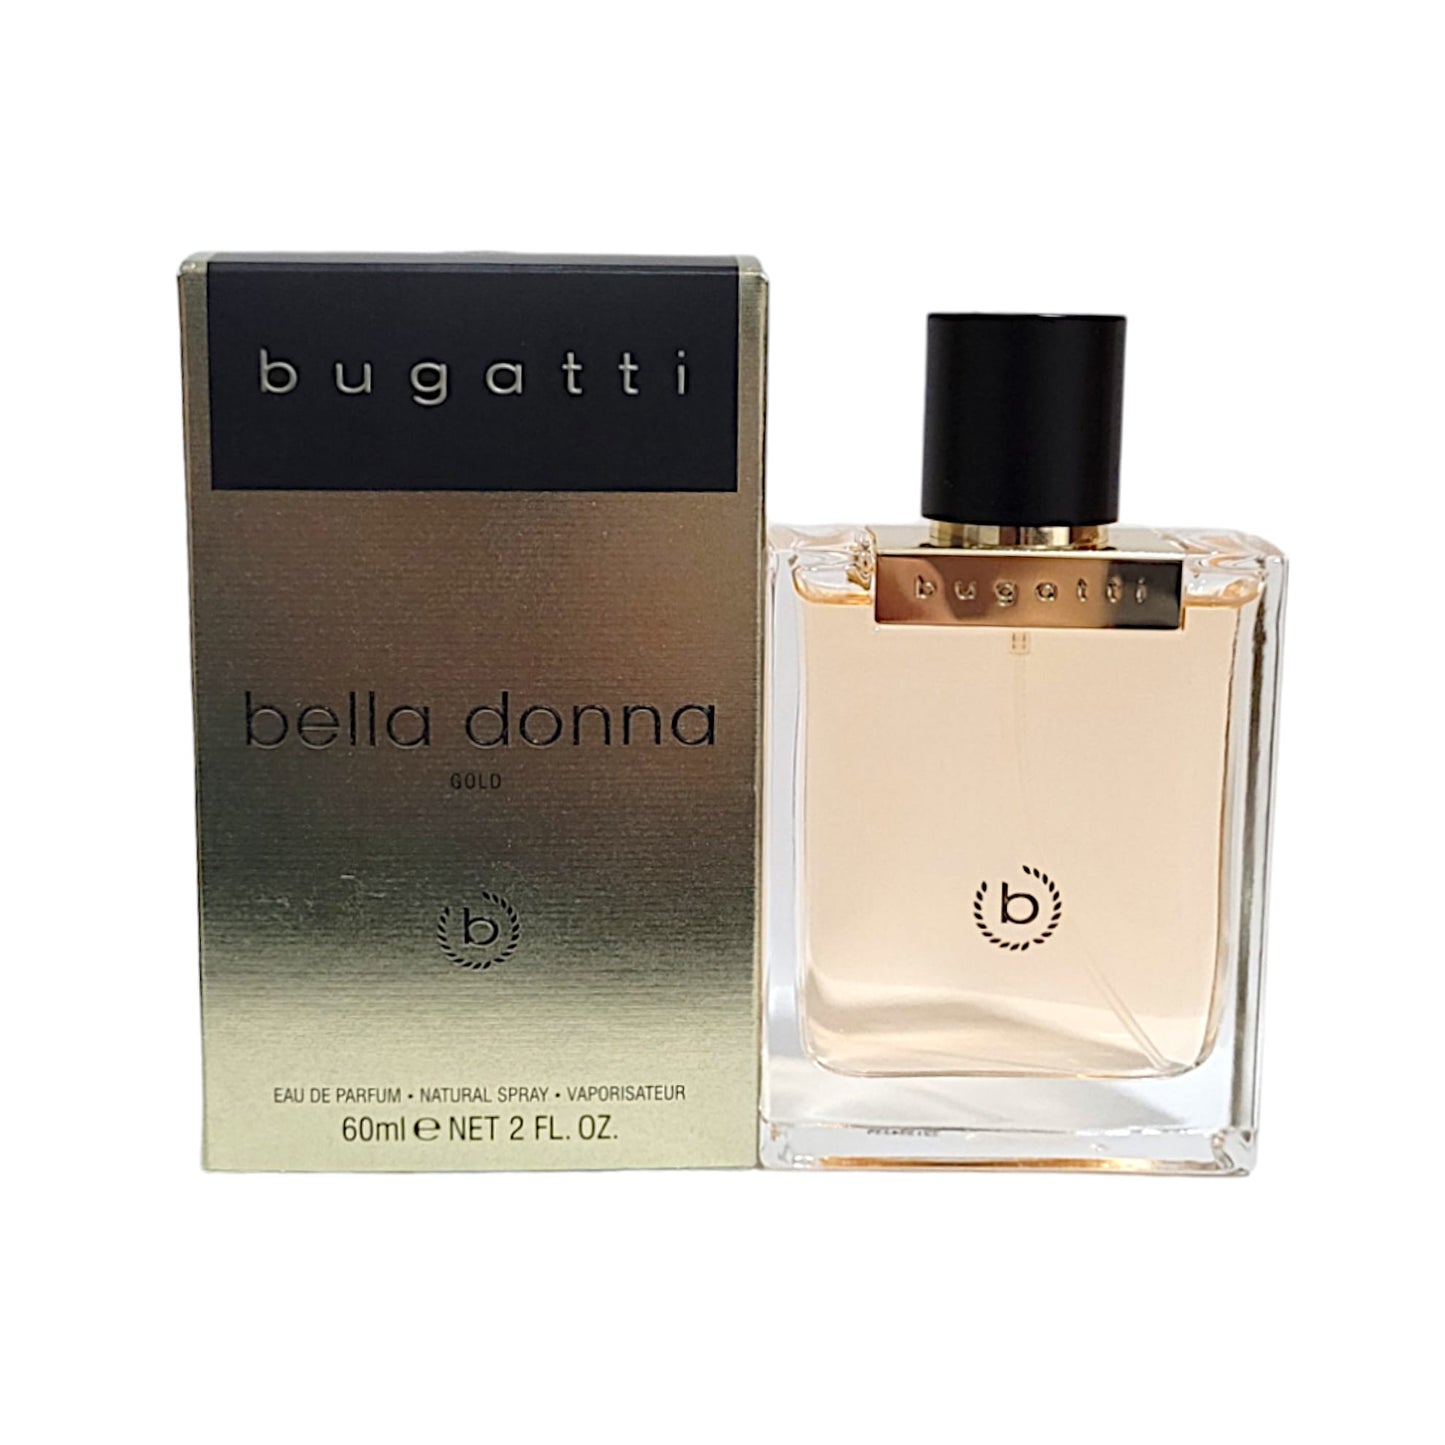 Bugatti Bella Donna Gold Eau de Parfum 60 ml